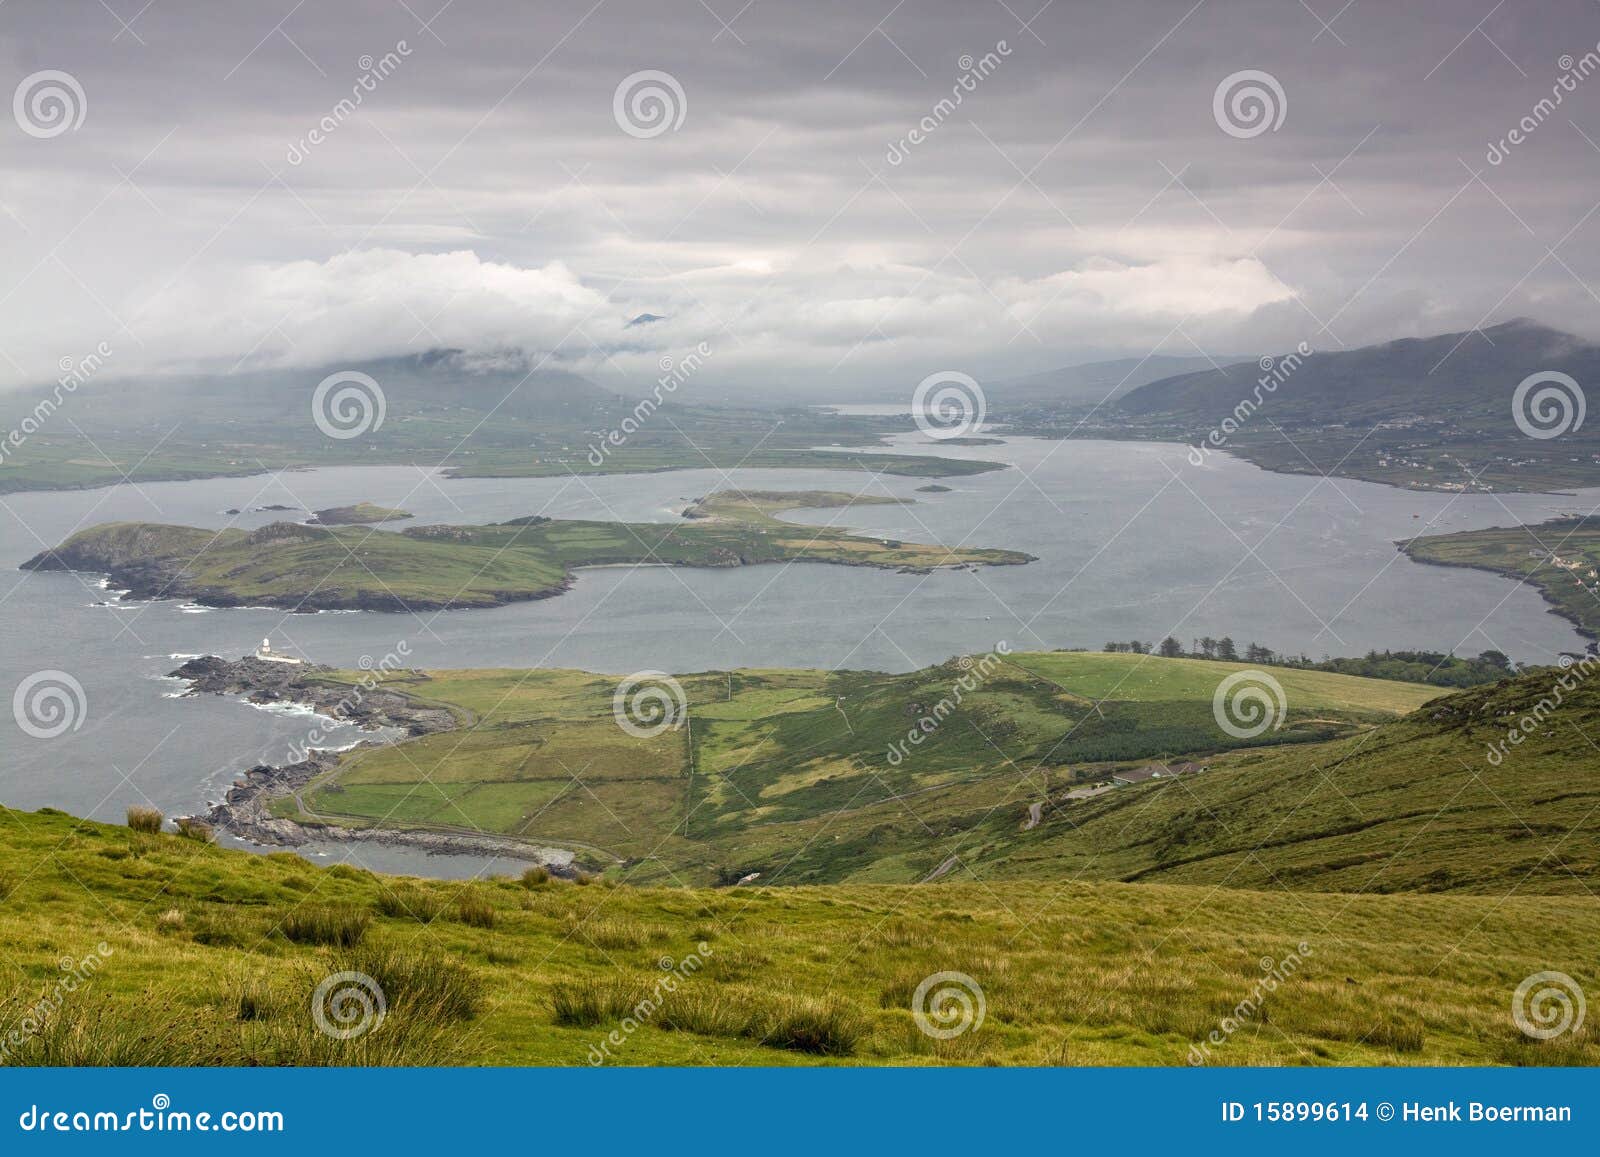 Valencia Island, Ireland stock photo. Image of nature - 15899614